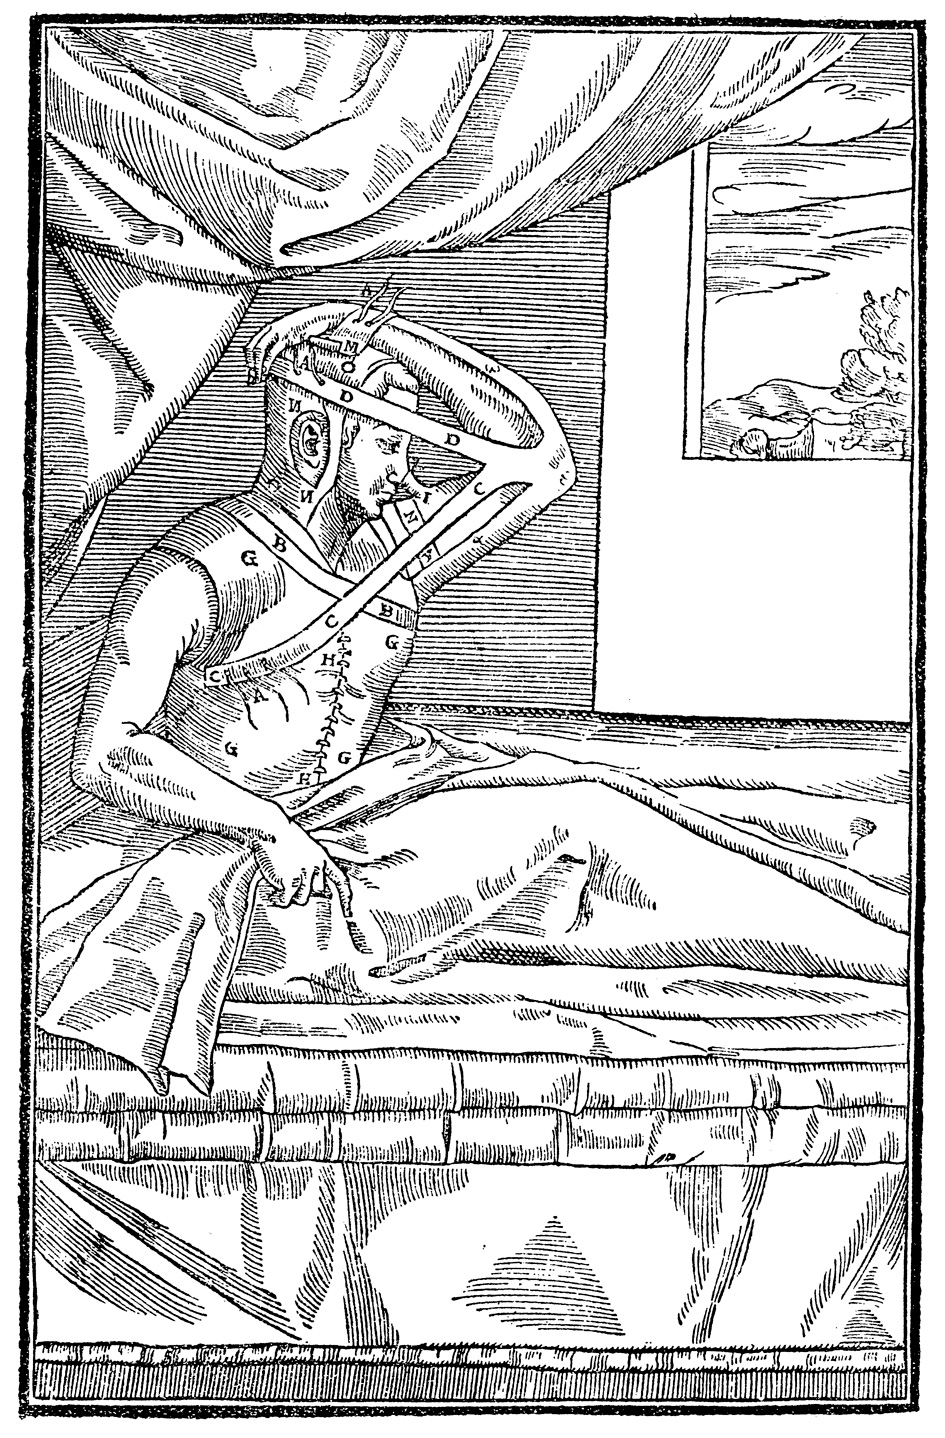 An illustration depicting an early Venetian rhinoplasty. 